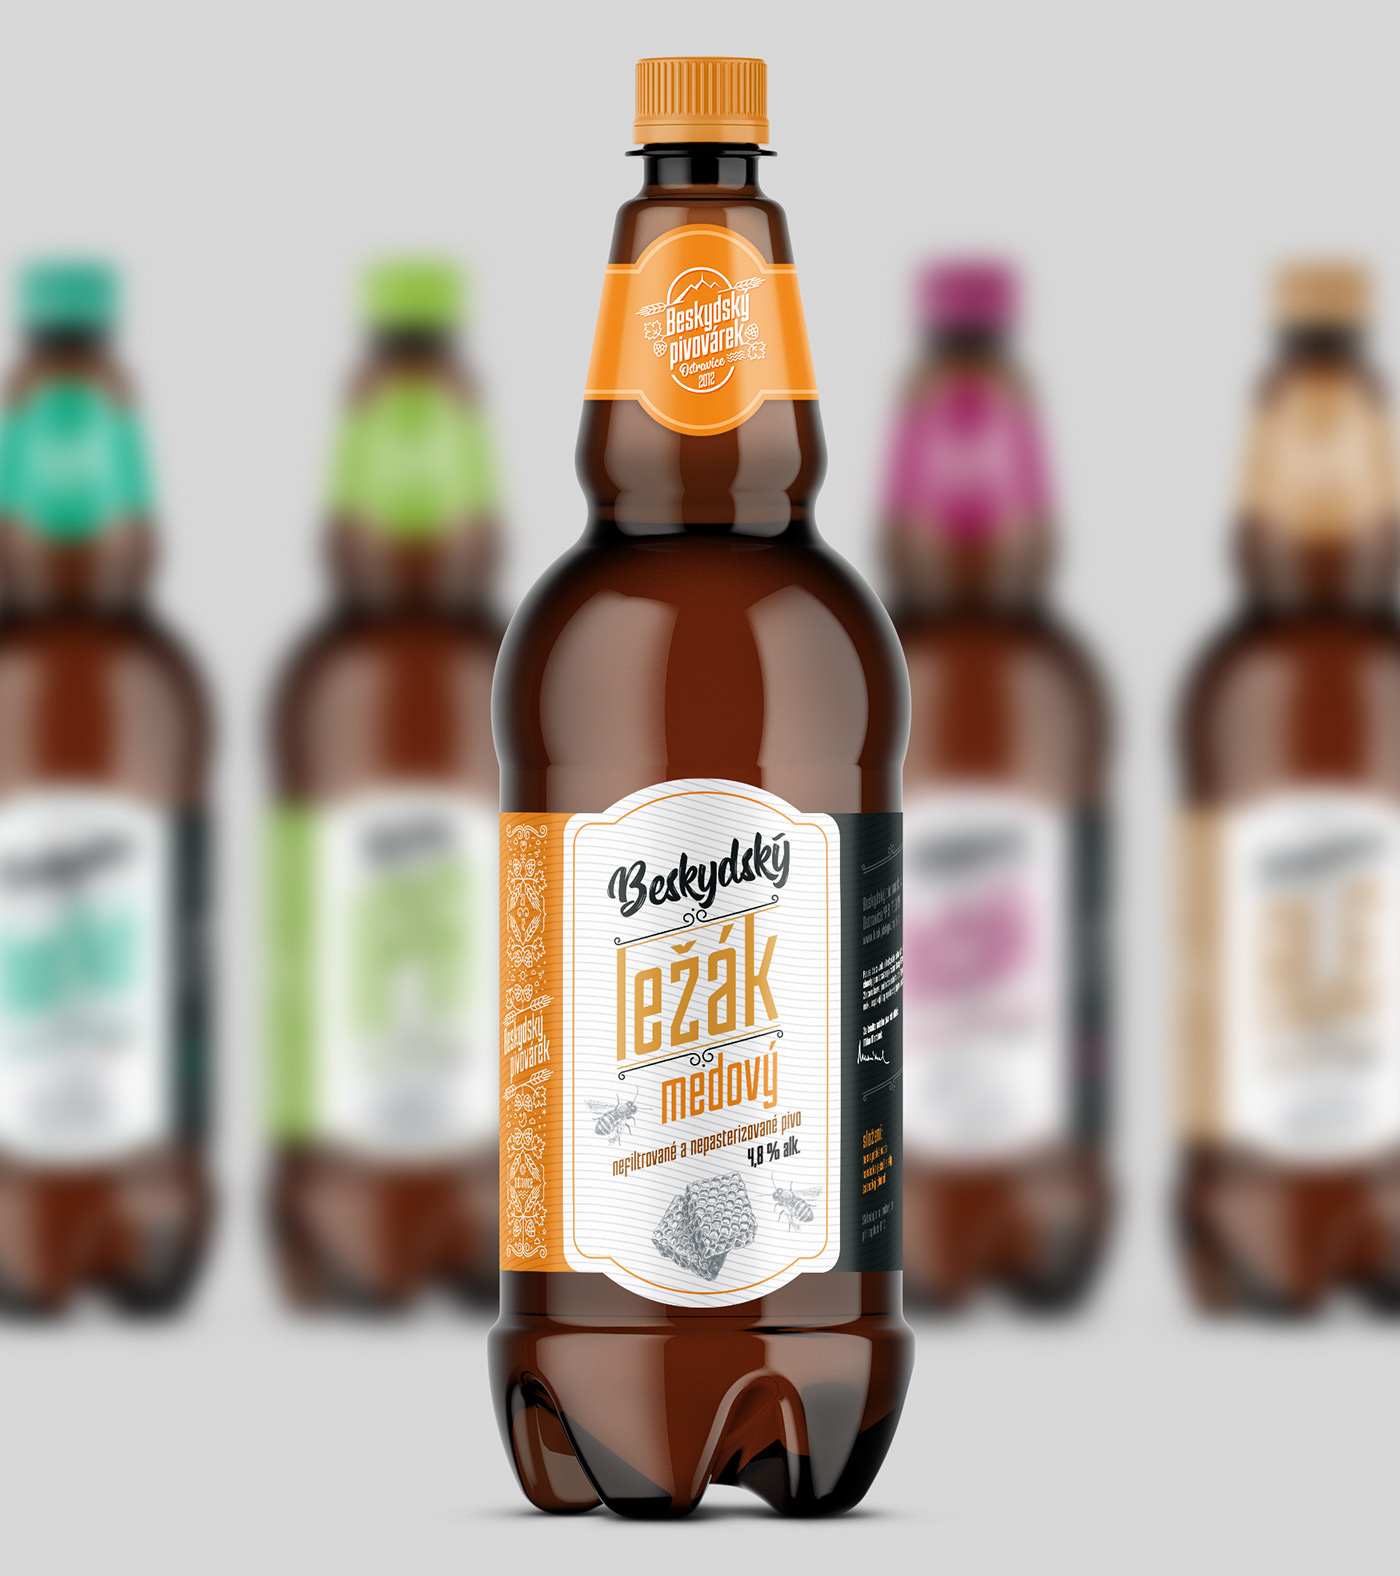 beer brewery hop bottle beskids etiquette Label brewing